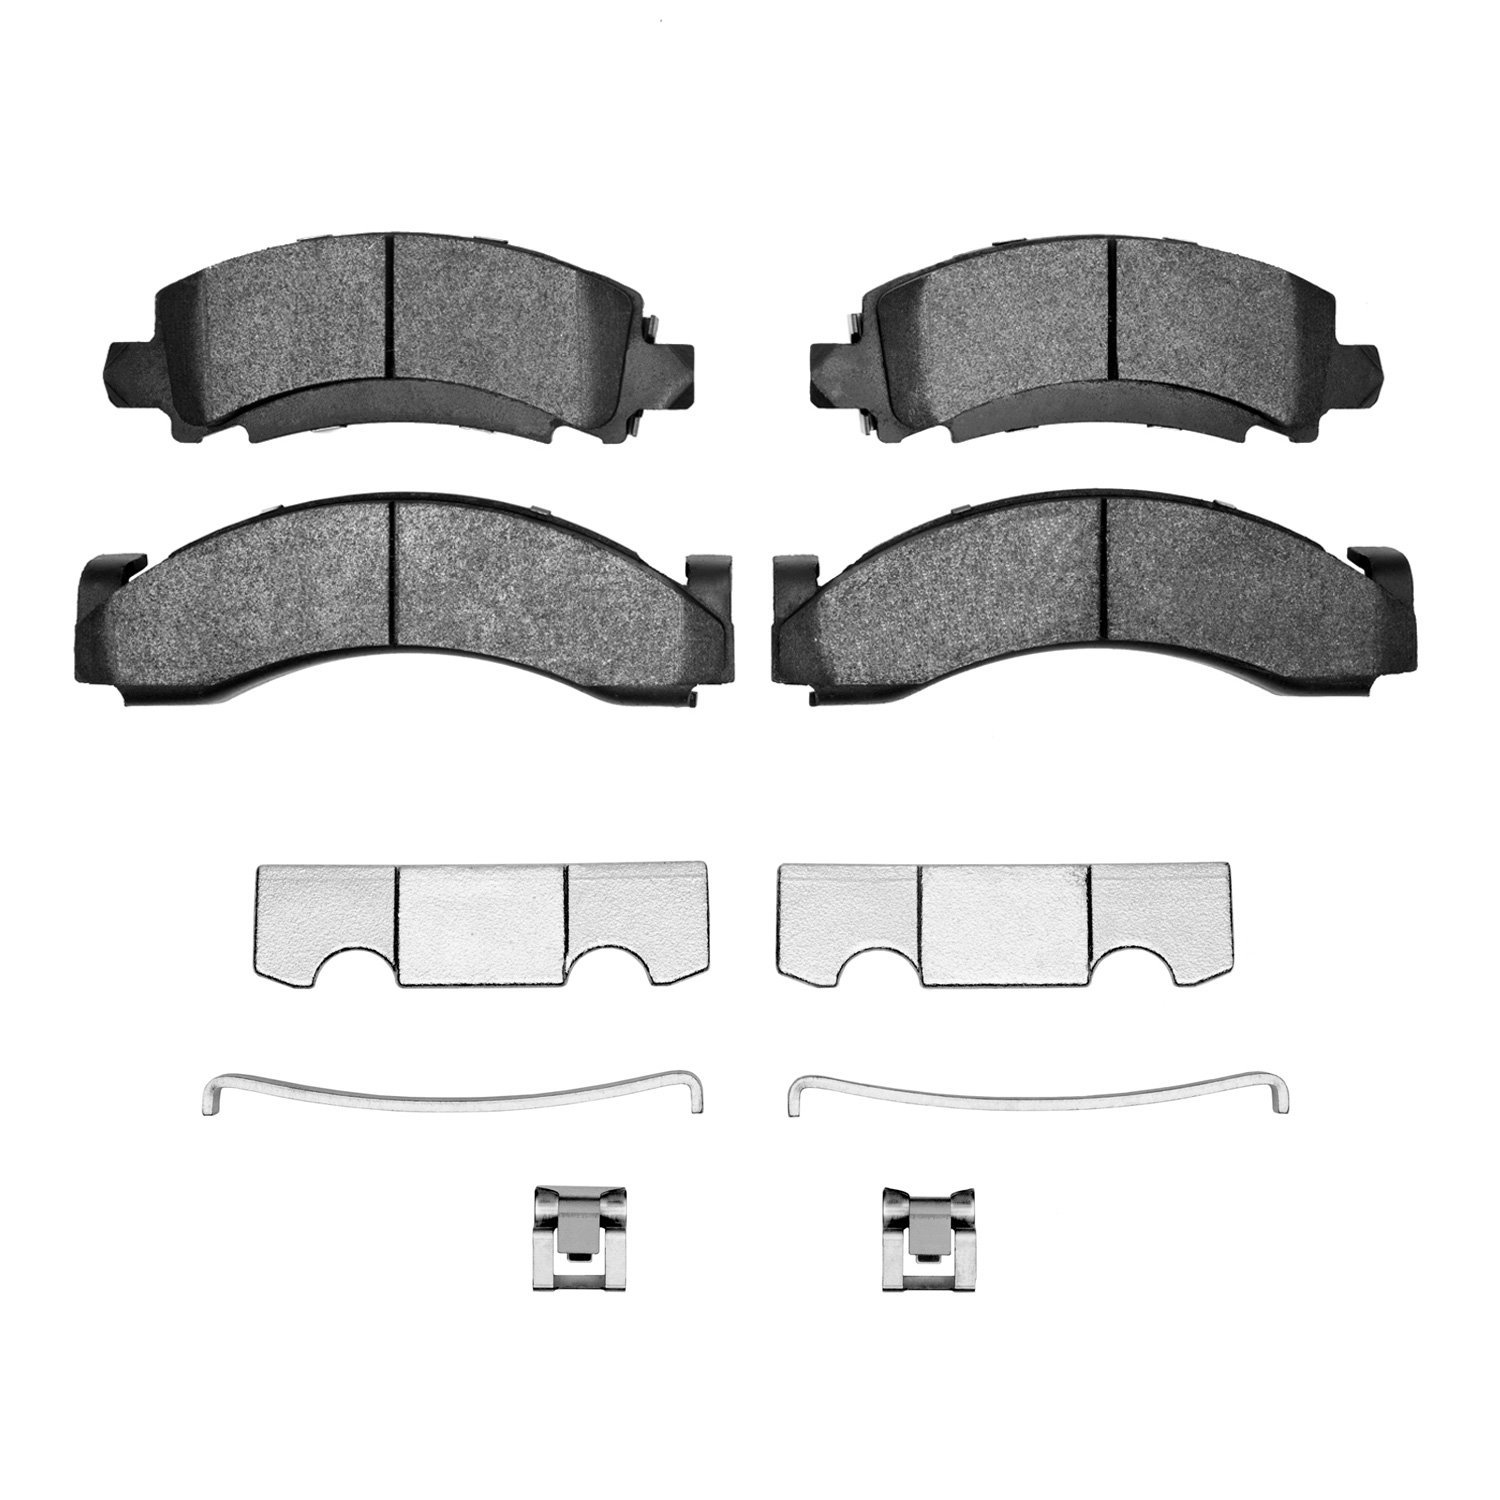 1551-0543-01 5000 Advanced Semi-Metallic Brake Pads & Hardware Kit, 1971-2005 Multiple Makes/Models, Position: Fr,Front,Rear,Rr